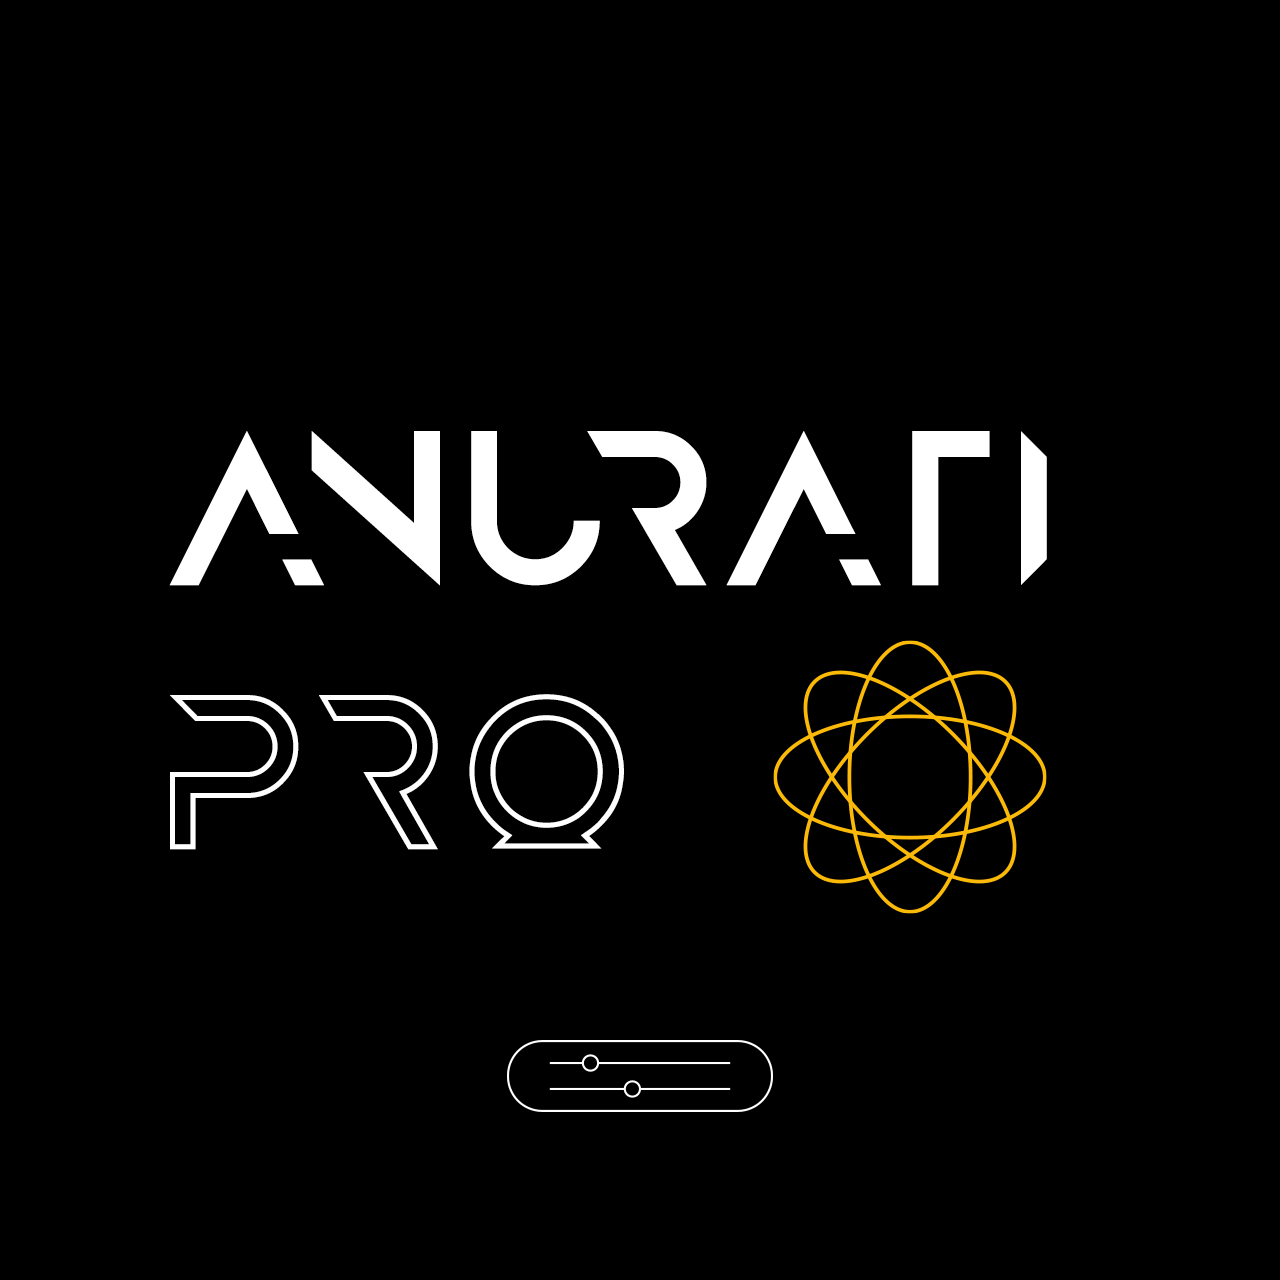 Anurati-Pro-gumroad